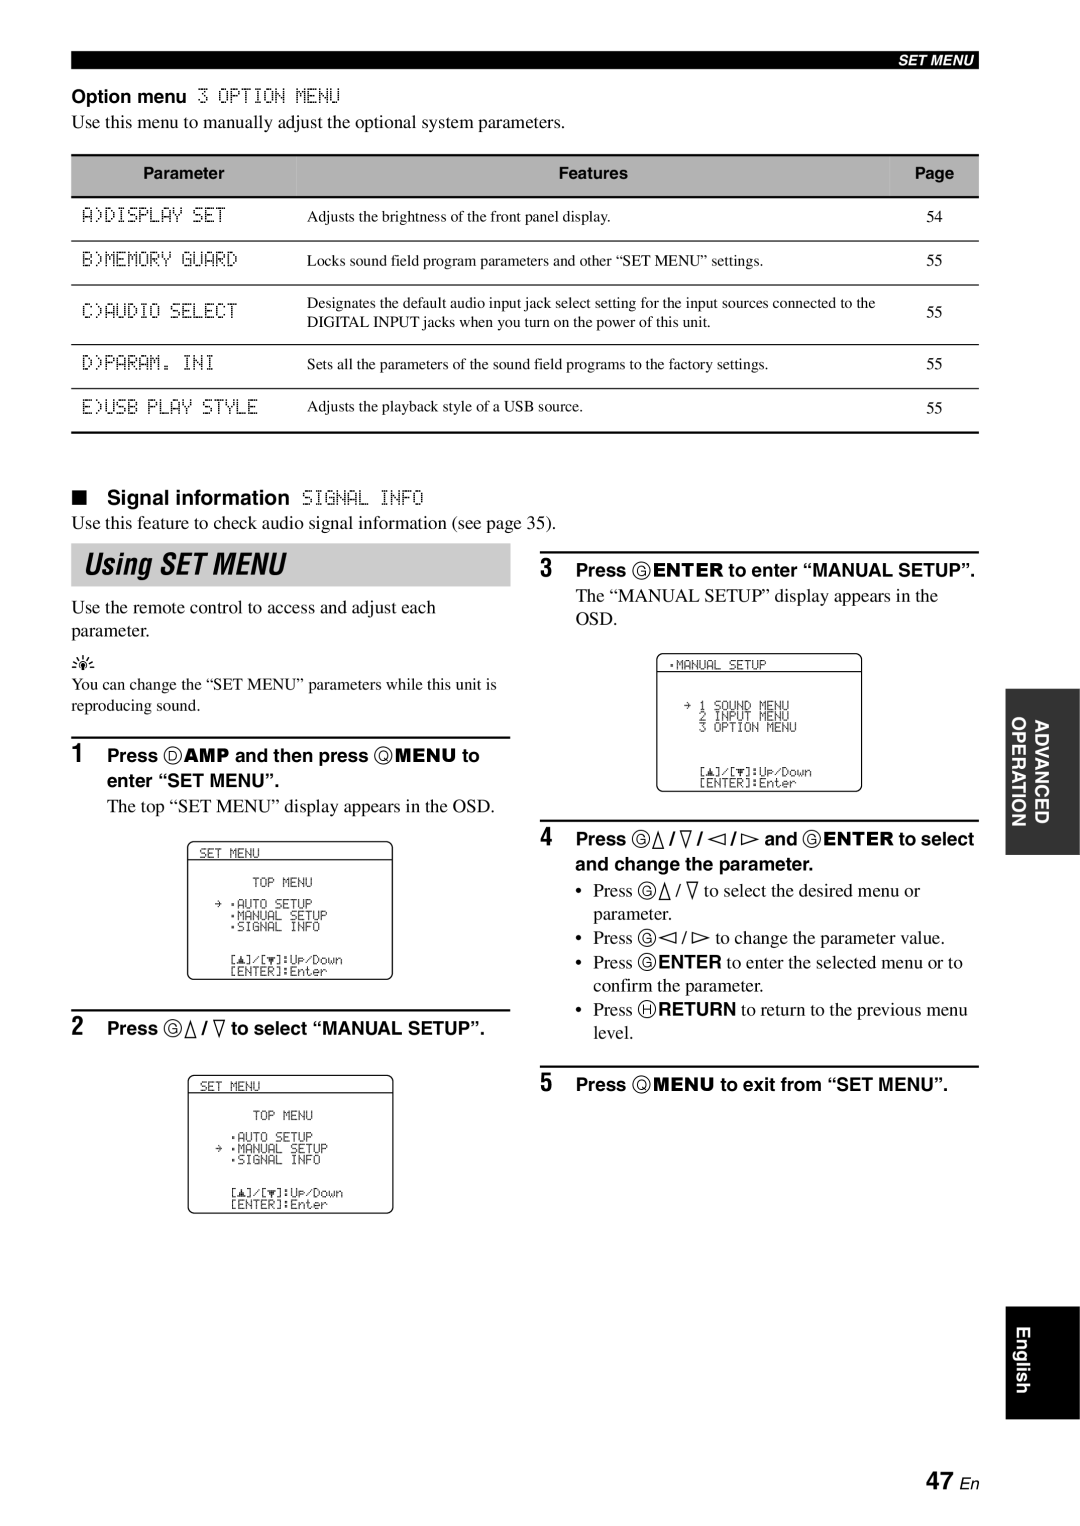 Yamaha RX-V561 owner manual Using SET MENU, 47 En, Signal information SIGNAL INFO 